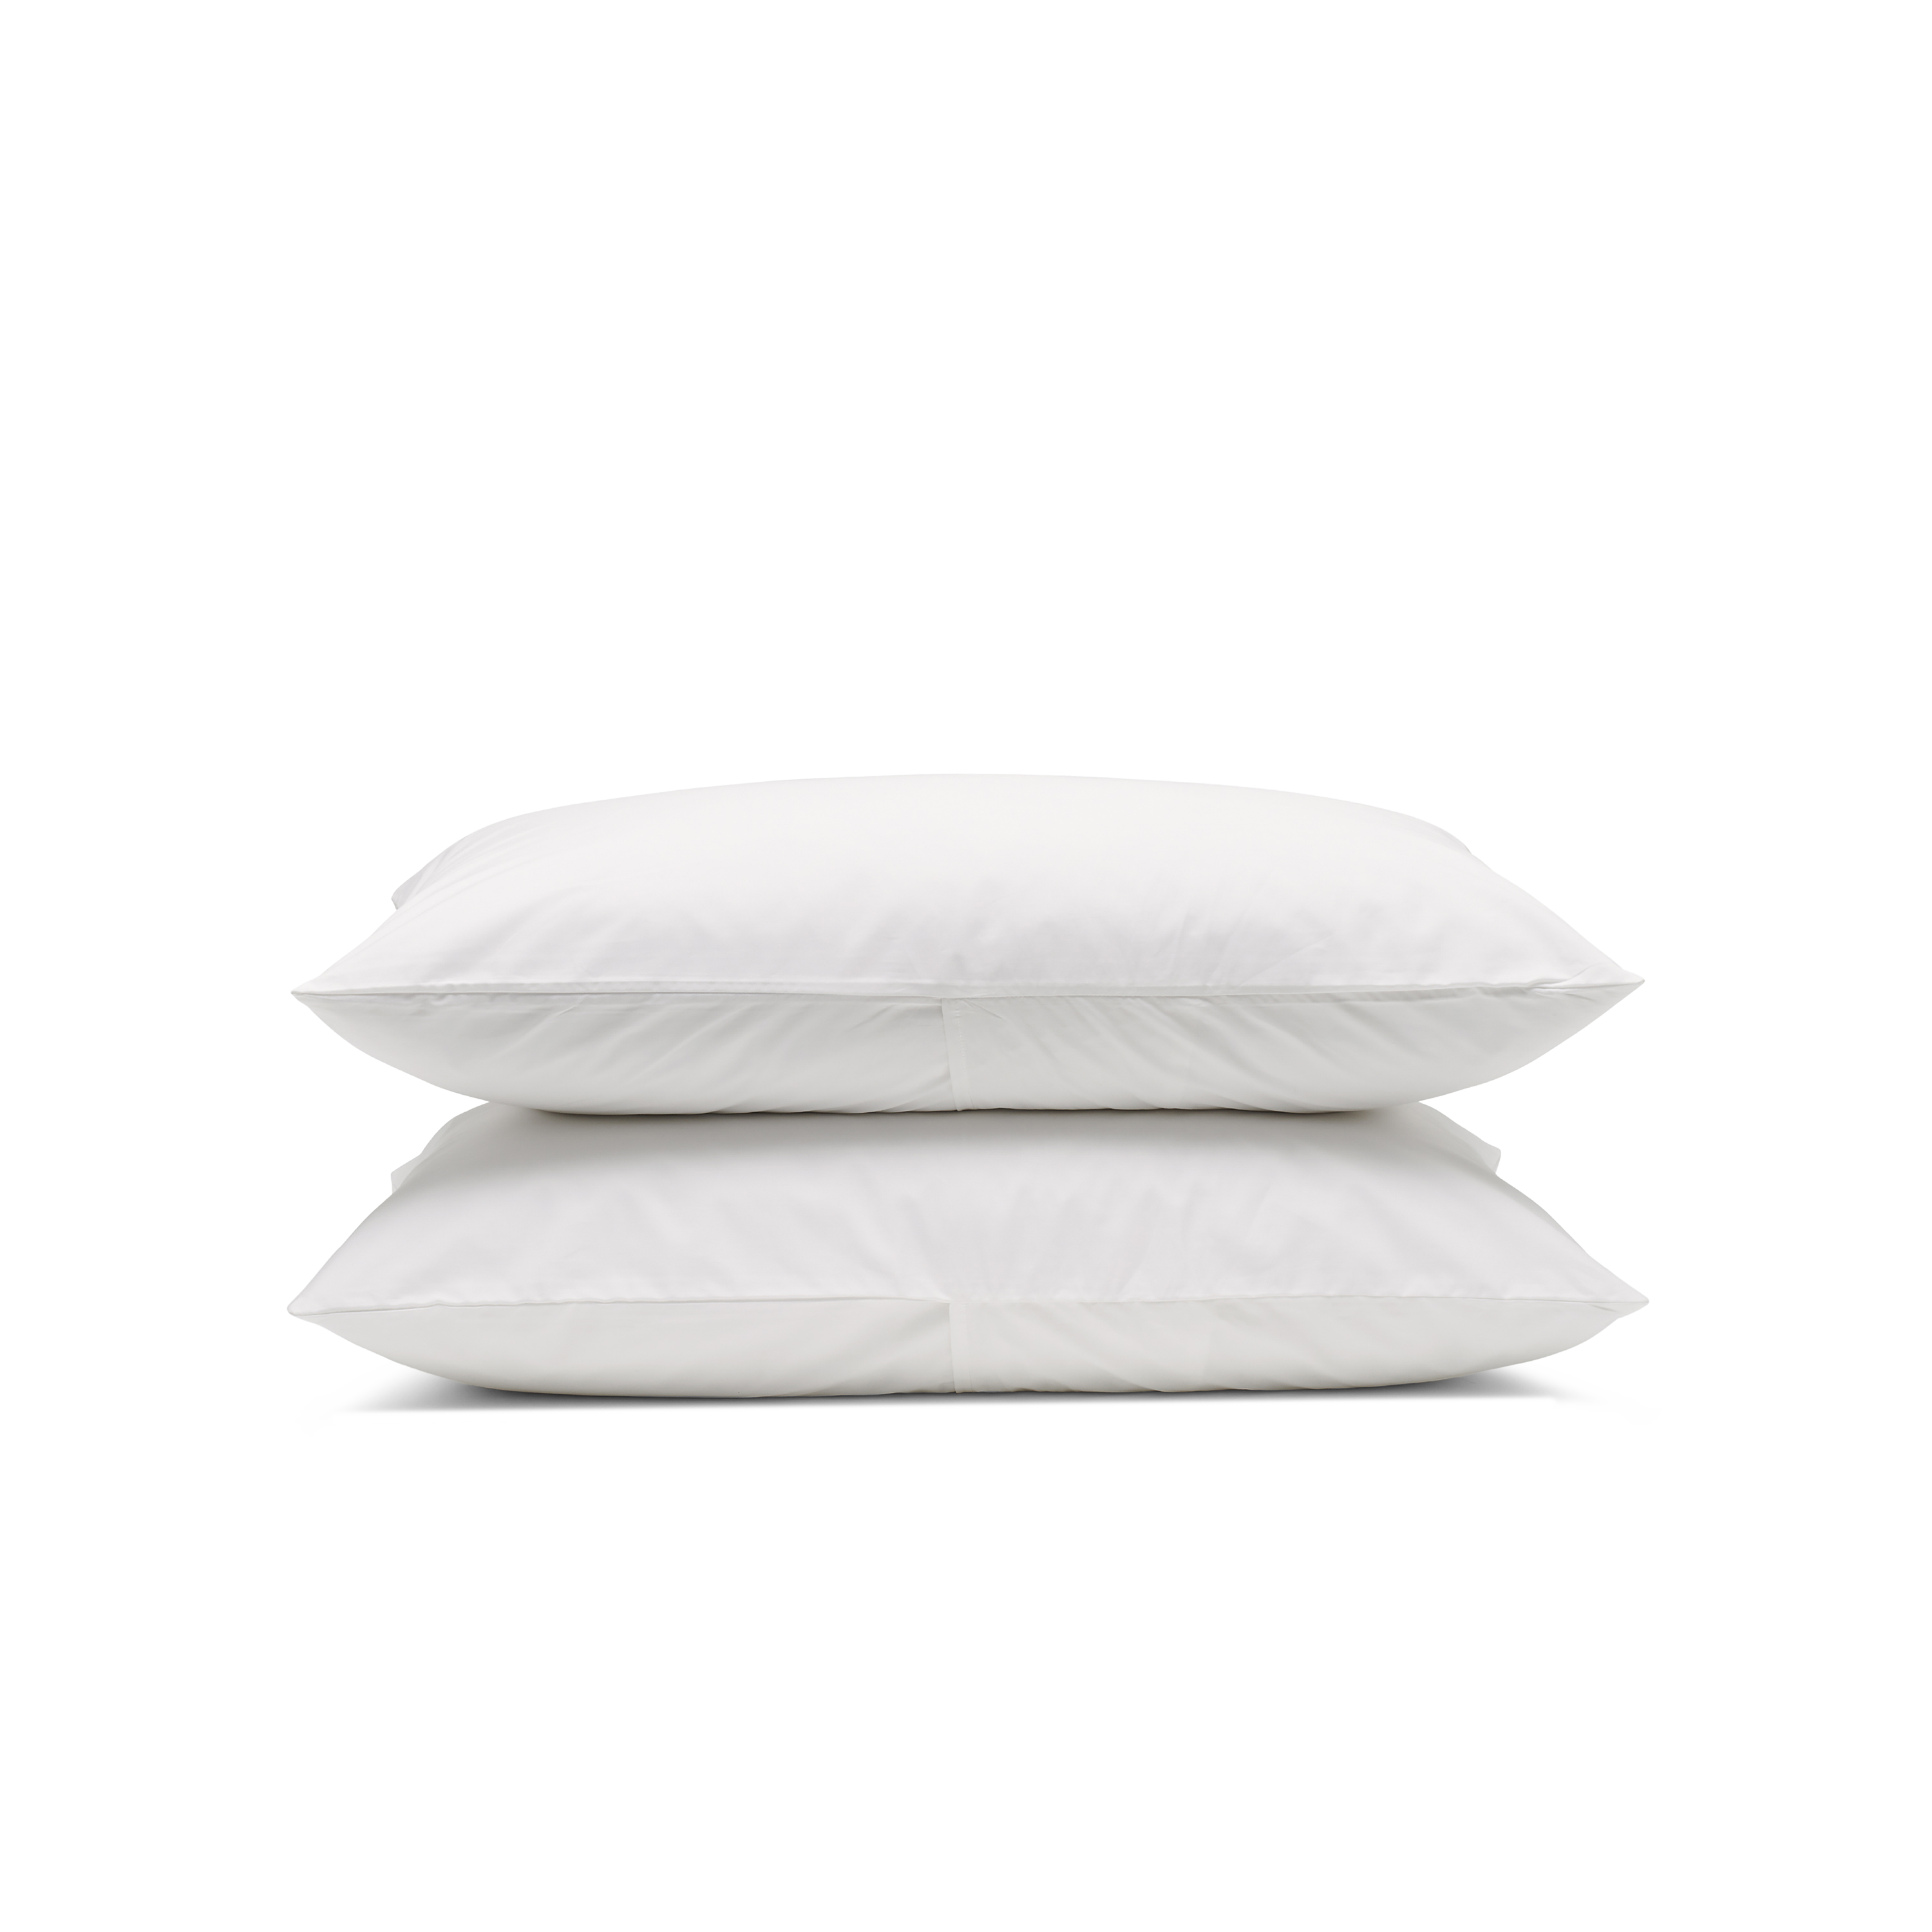 Classic Cotton Pillowcase Pair - Snow